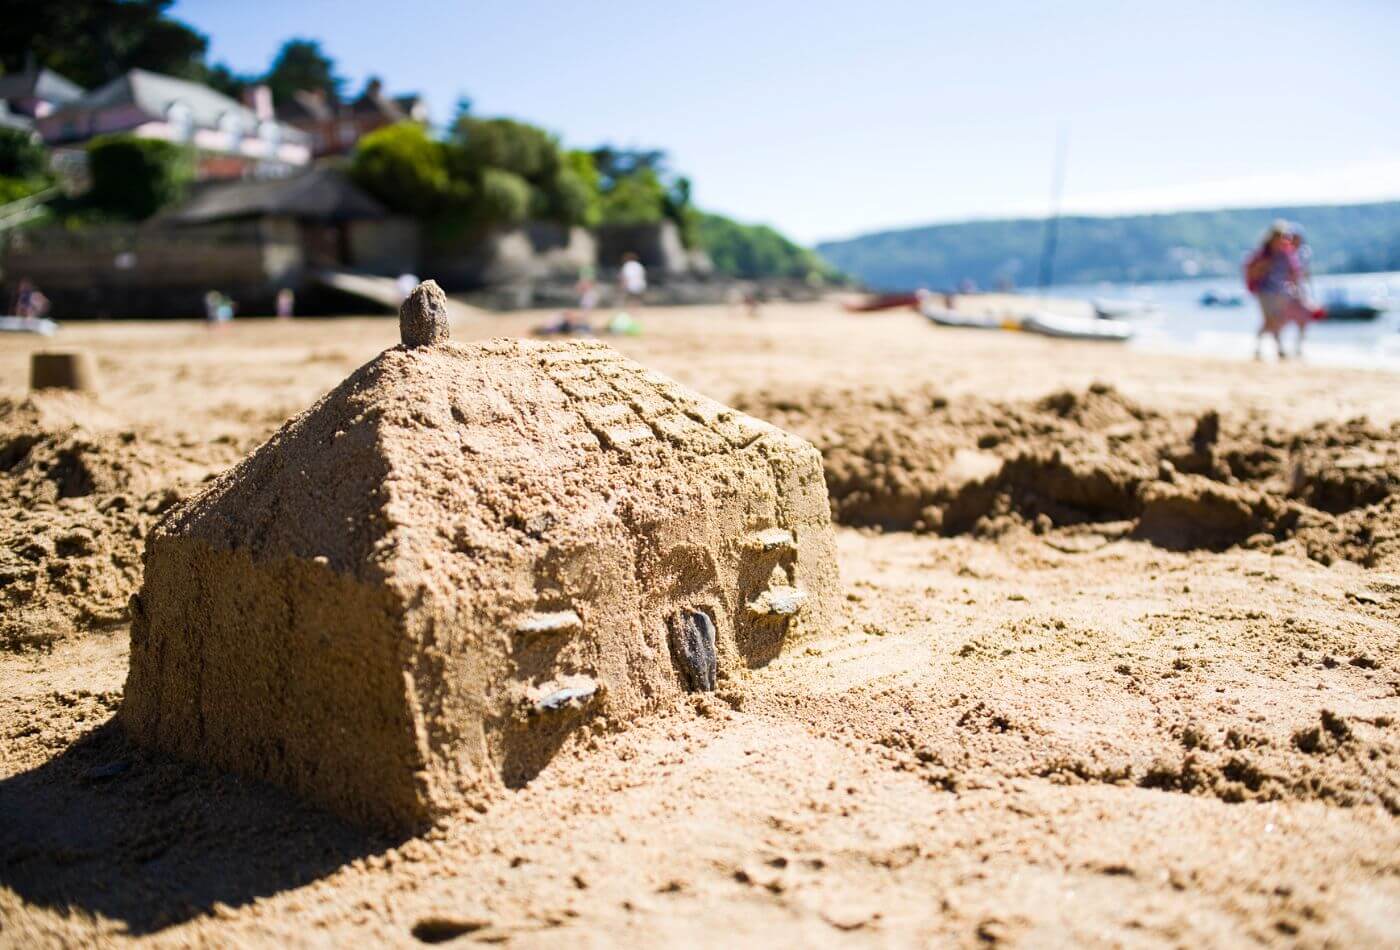 A house made of sand on the beach.